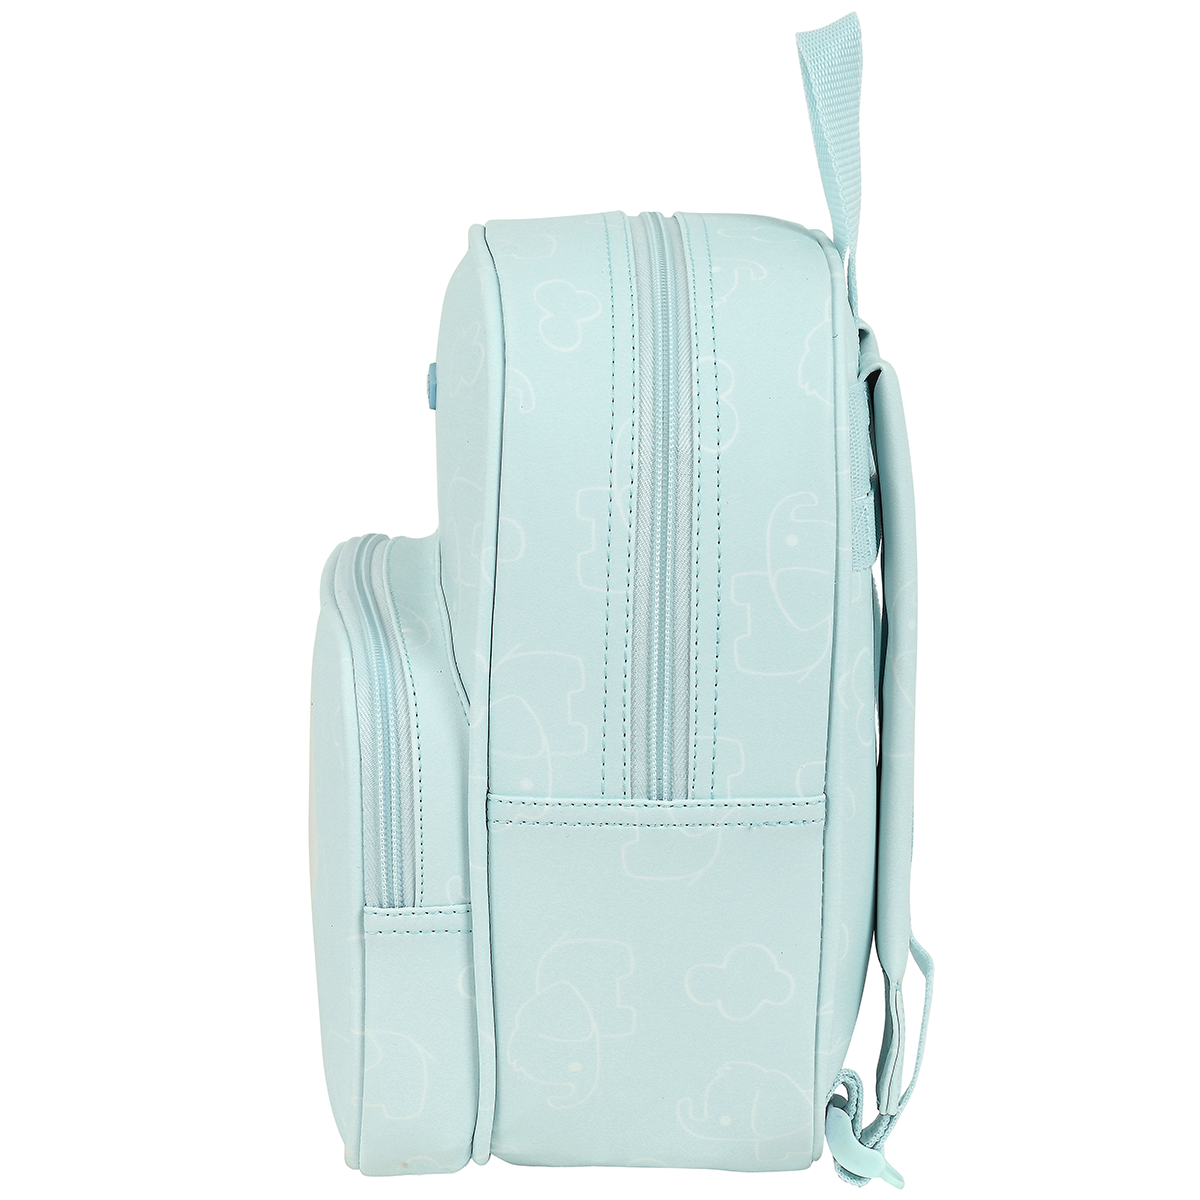 Olifant Toddler backpack - 27 x 22 x 10 cm - Polyester